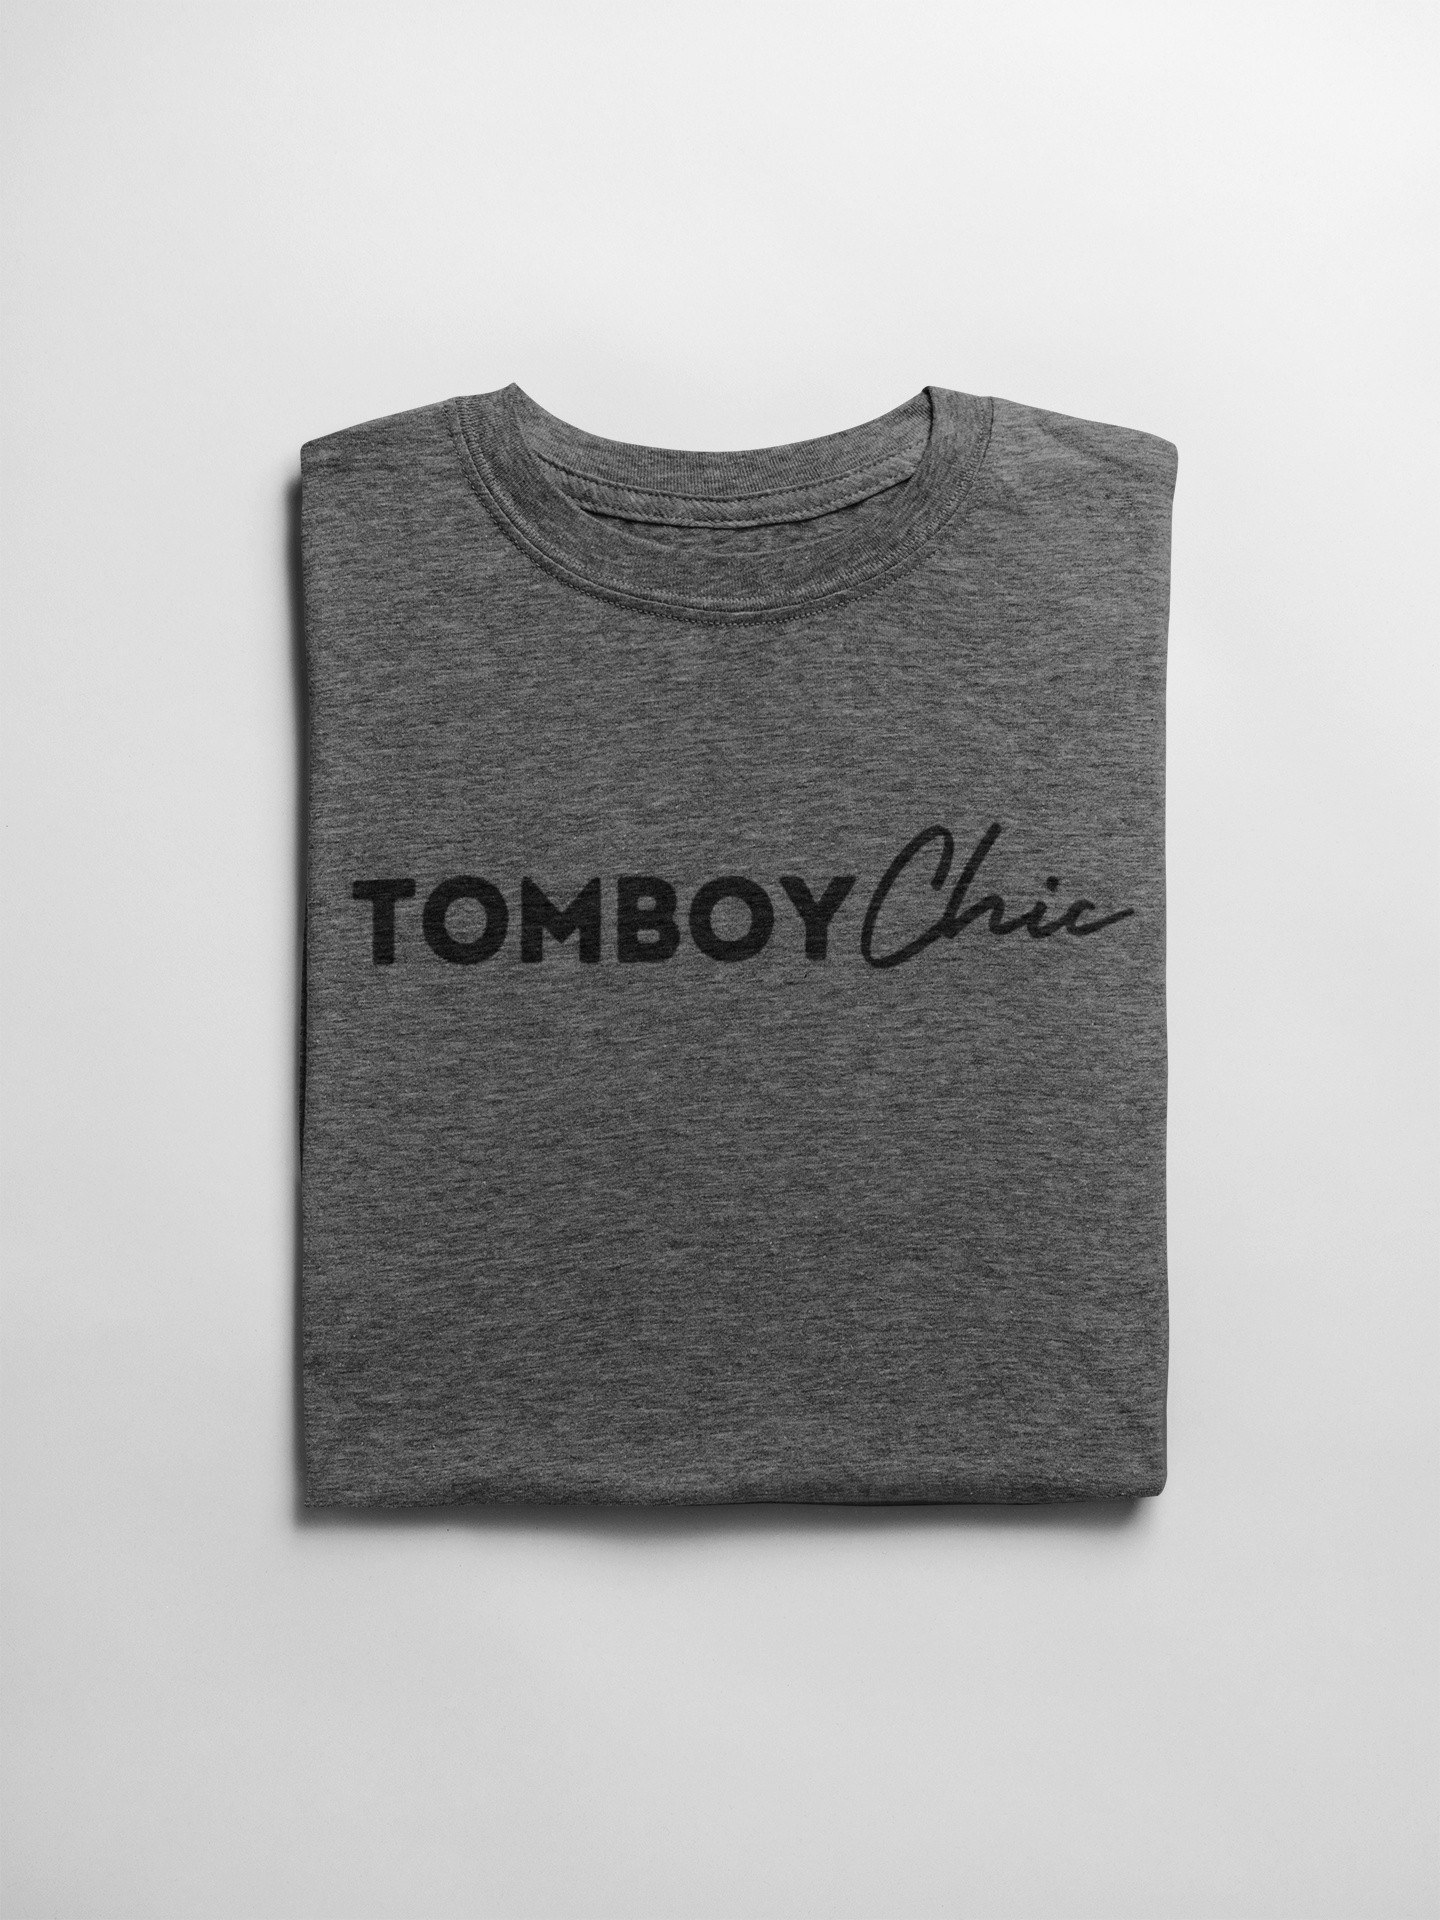 Tomboy Chic Tee